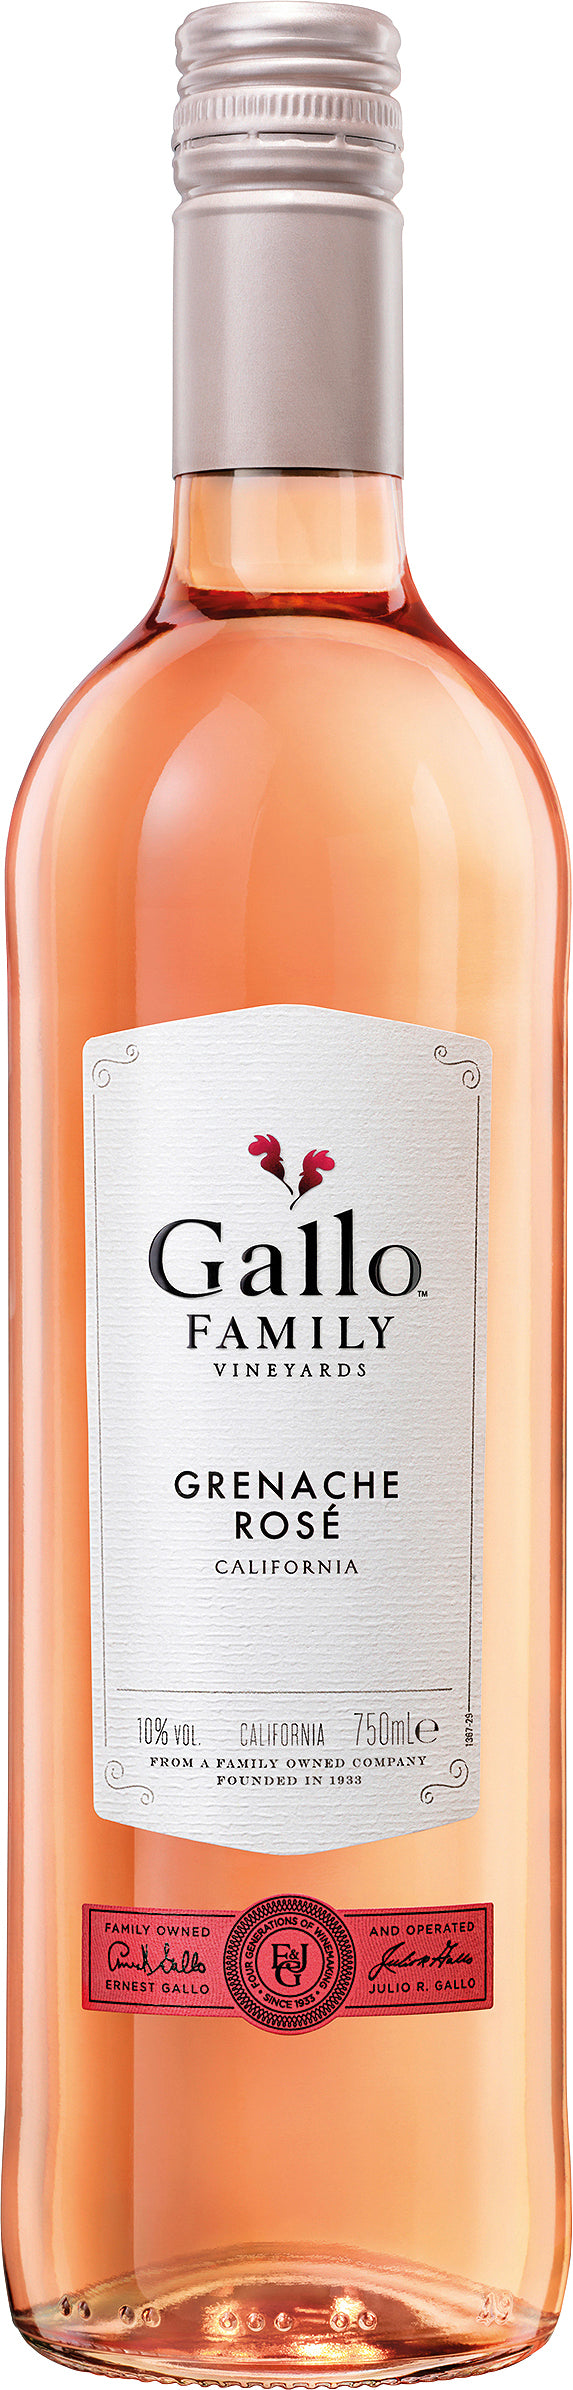 Gallo Family Vineyards Grenache Rose liebliche Südafrika 750ml 9,5% Vol